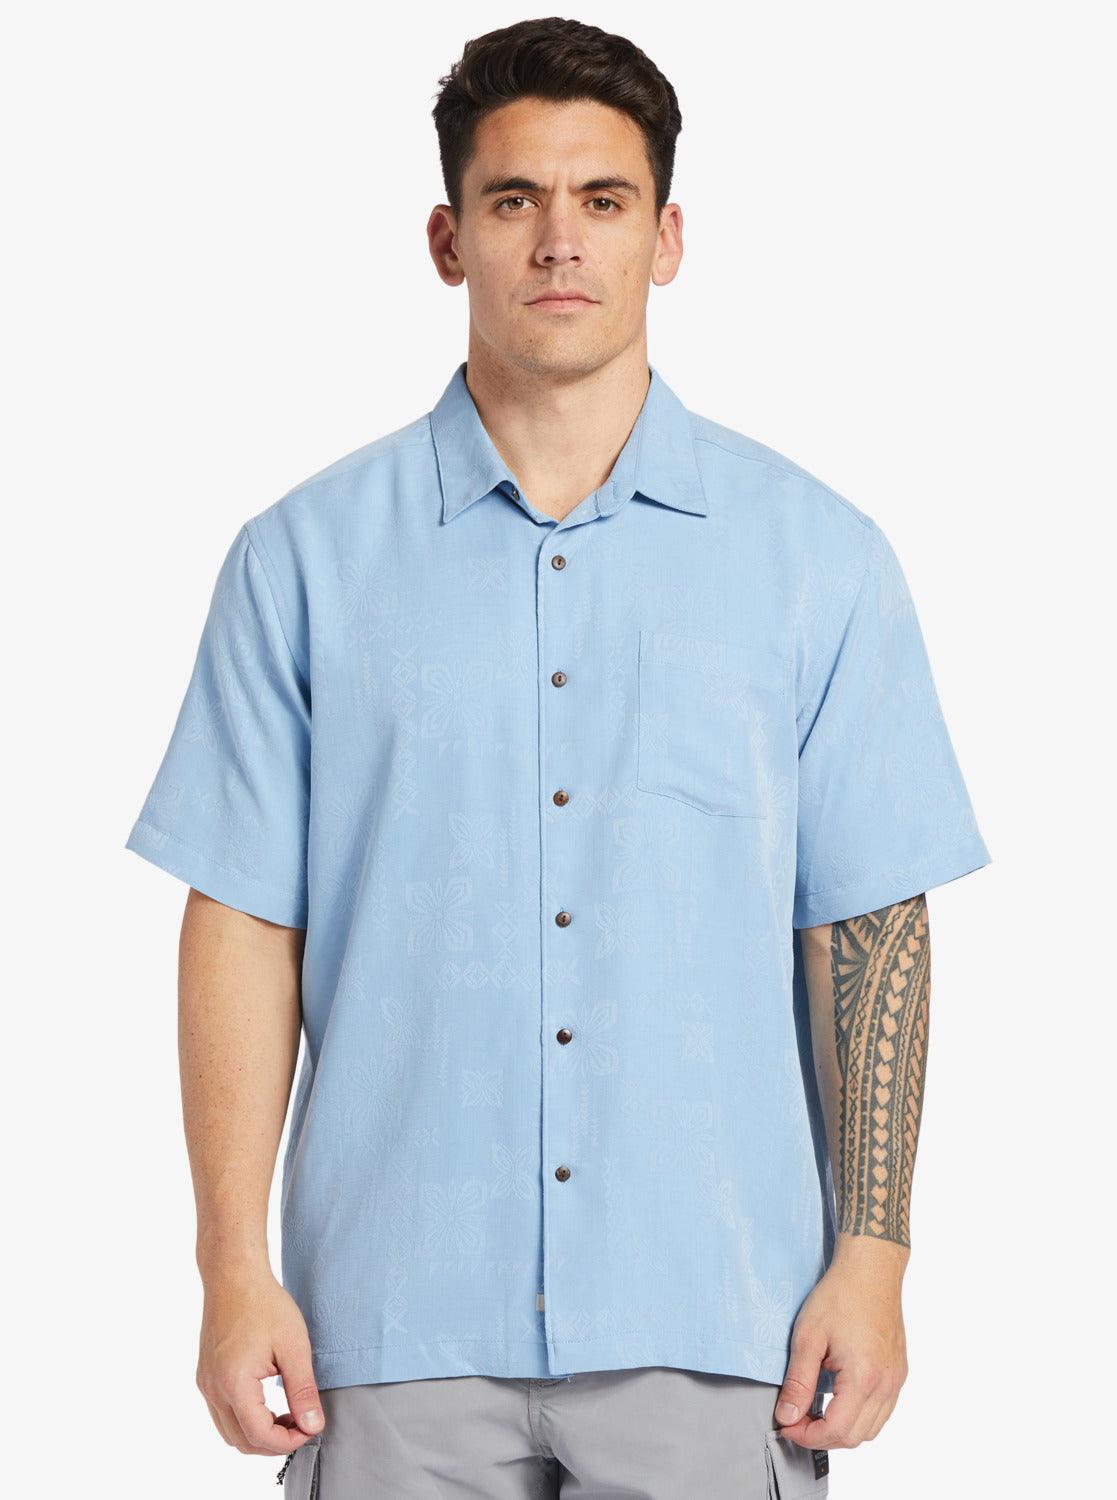 Waterman Manele Bay Button Shirt - SoHa Surf Shop